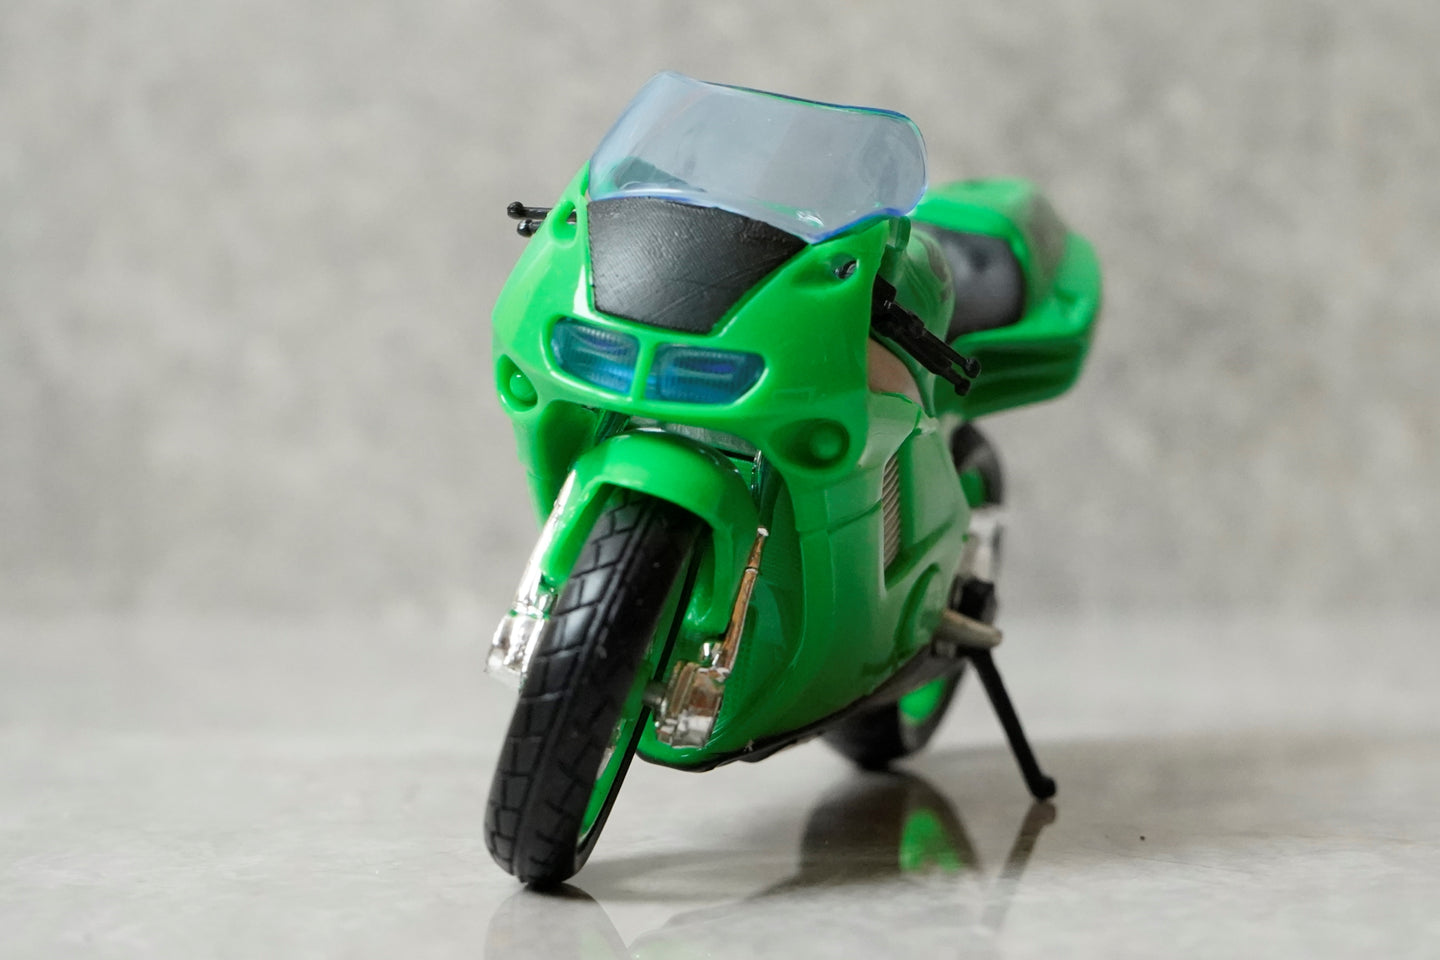 Honda NR Diecast Bike 1:18 Motorcycle Model By Maisto